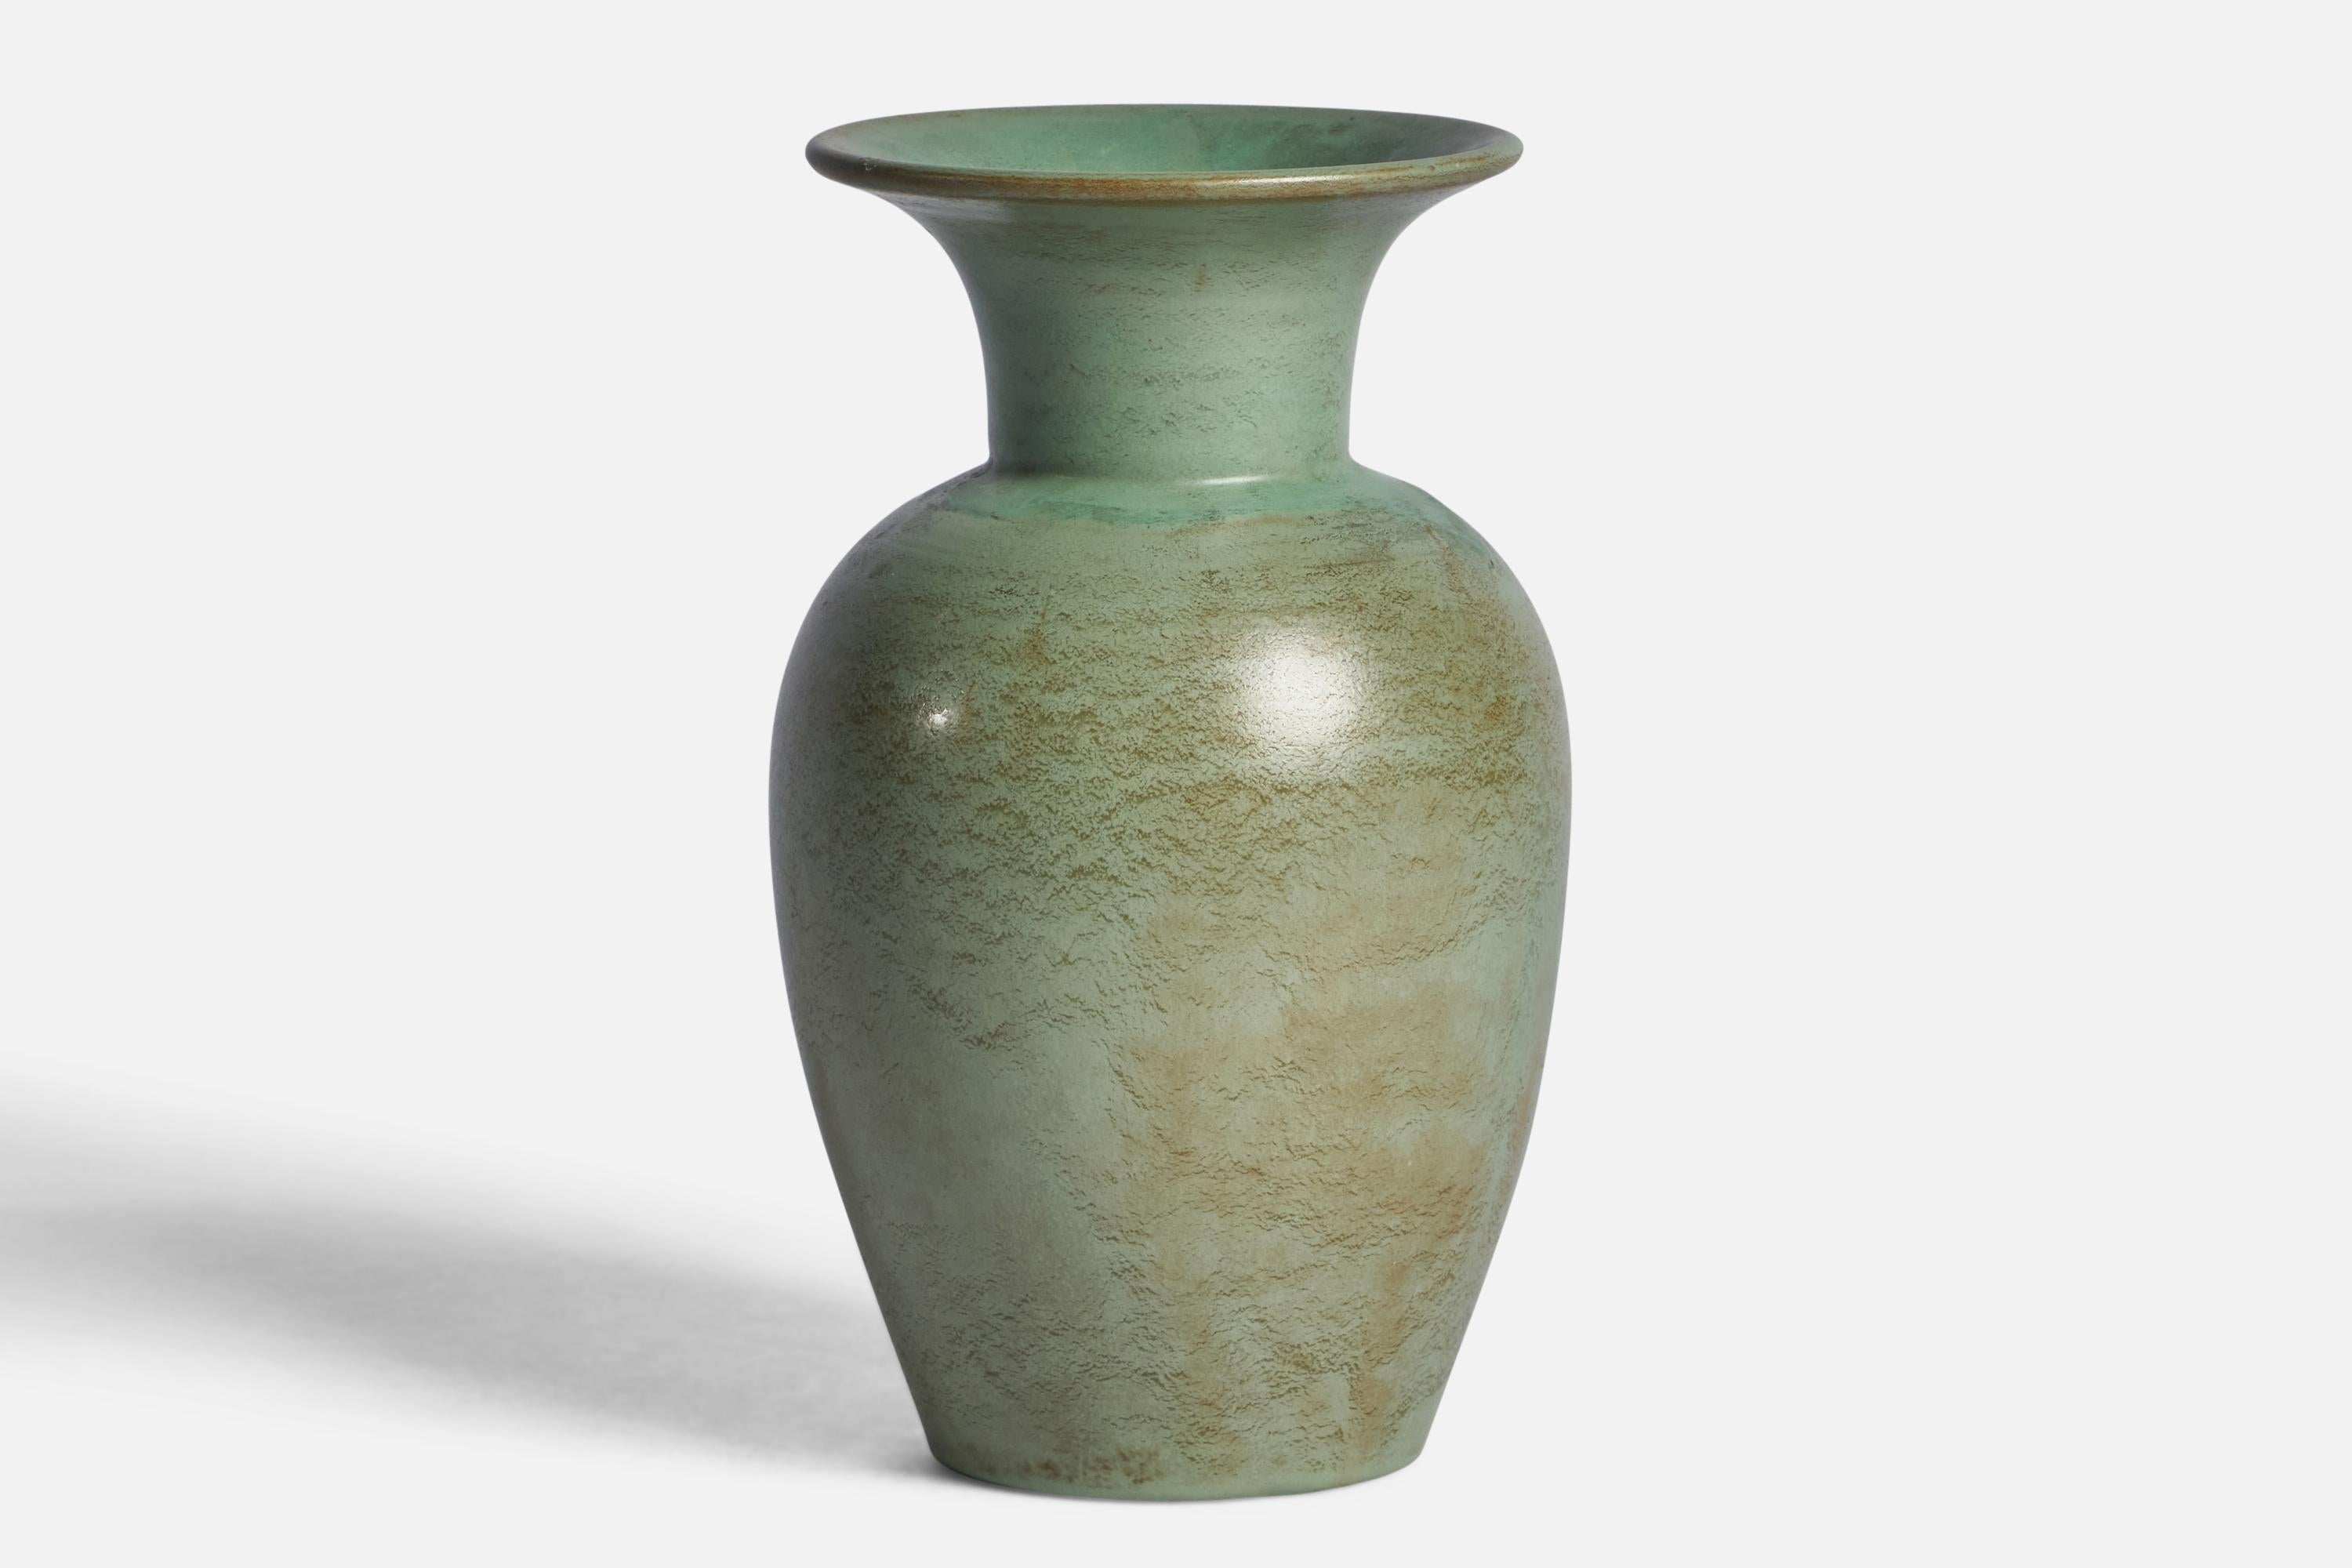 A green-glazed earthenware vase designed by Ewald Dahlskog and produced by Bo Fajans, Sweden, 1930s.